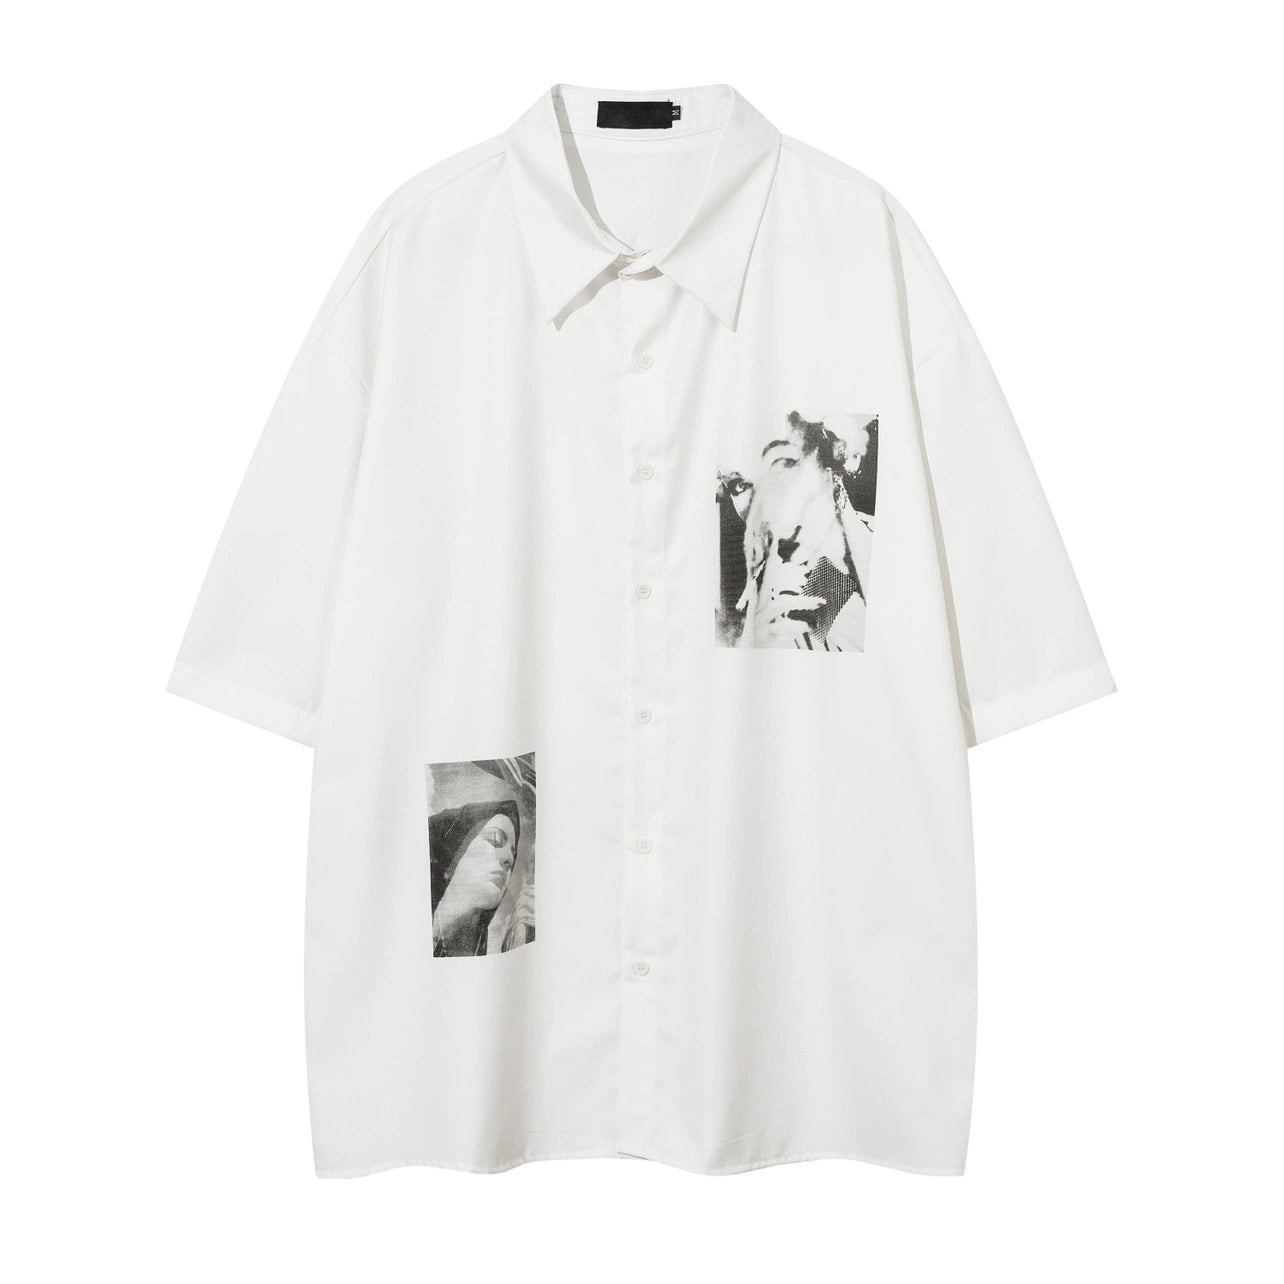 Oversize Print Short Sleeve Shirt WN5871